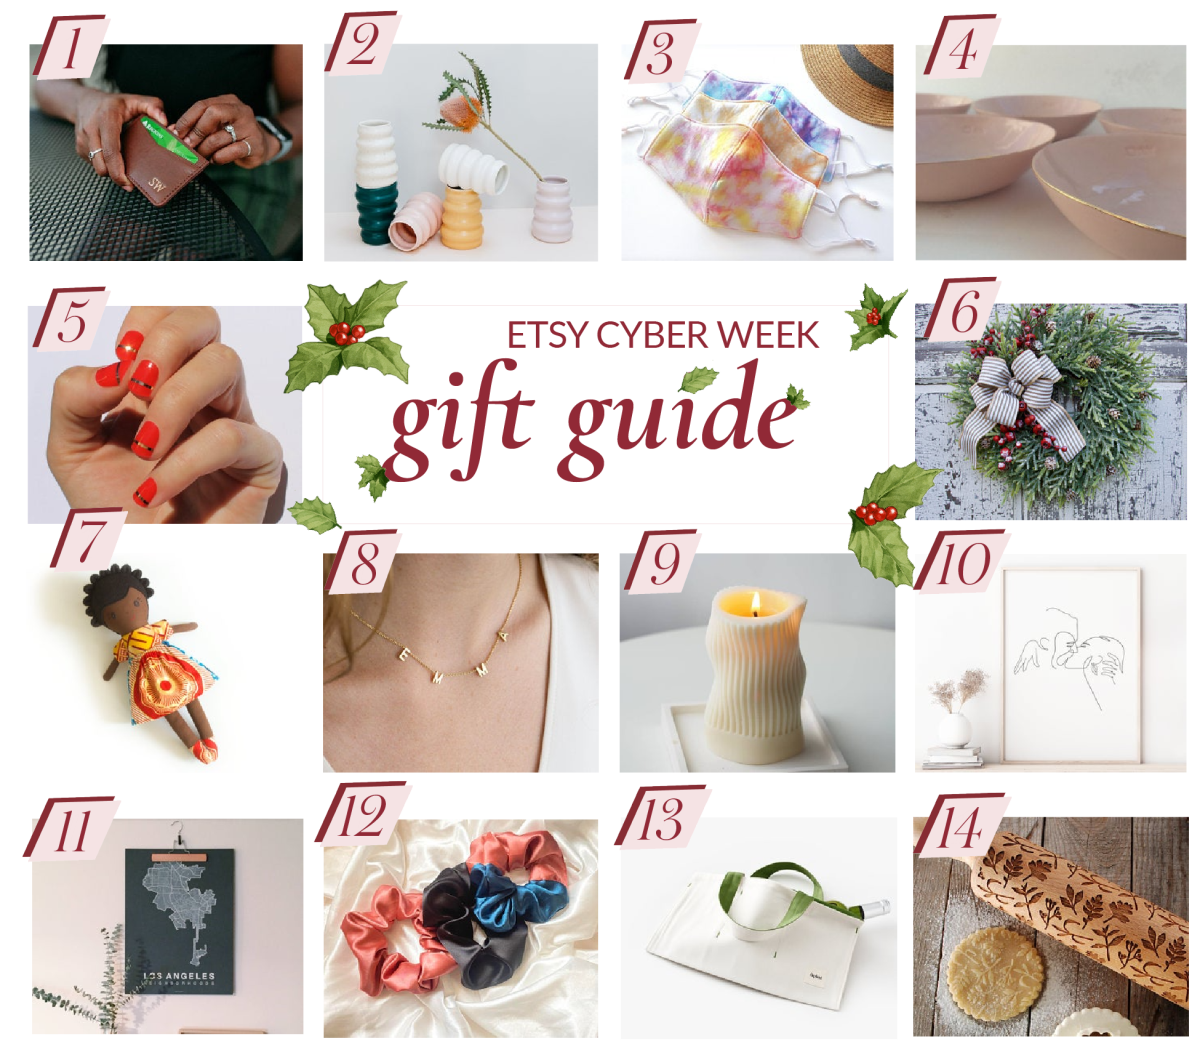 Gift Guide Board 1